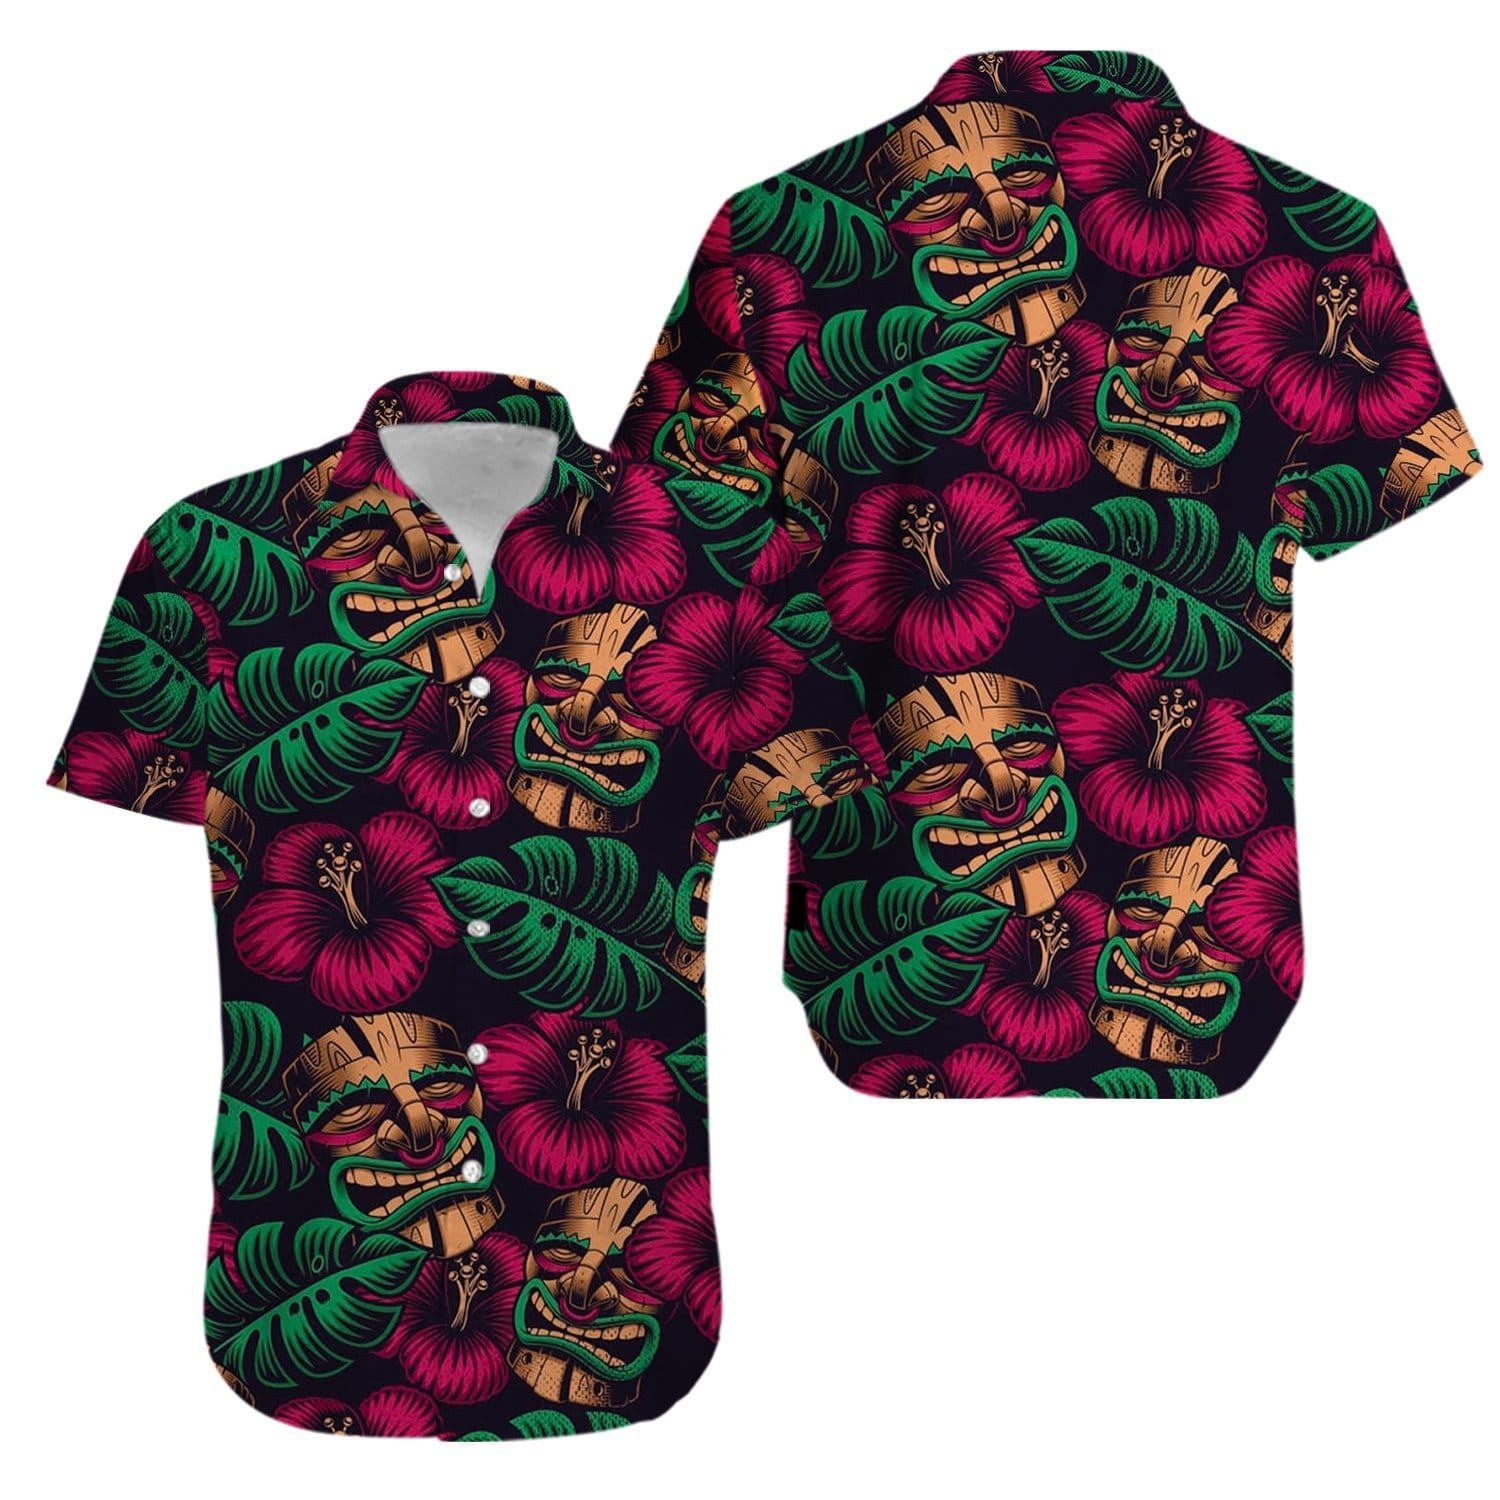 kurobase-aku-aku-mascaras-tiki-mask-aloha-hawaiian-shirt-for-men-and-wonmen-hw7582.jpg